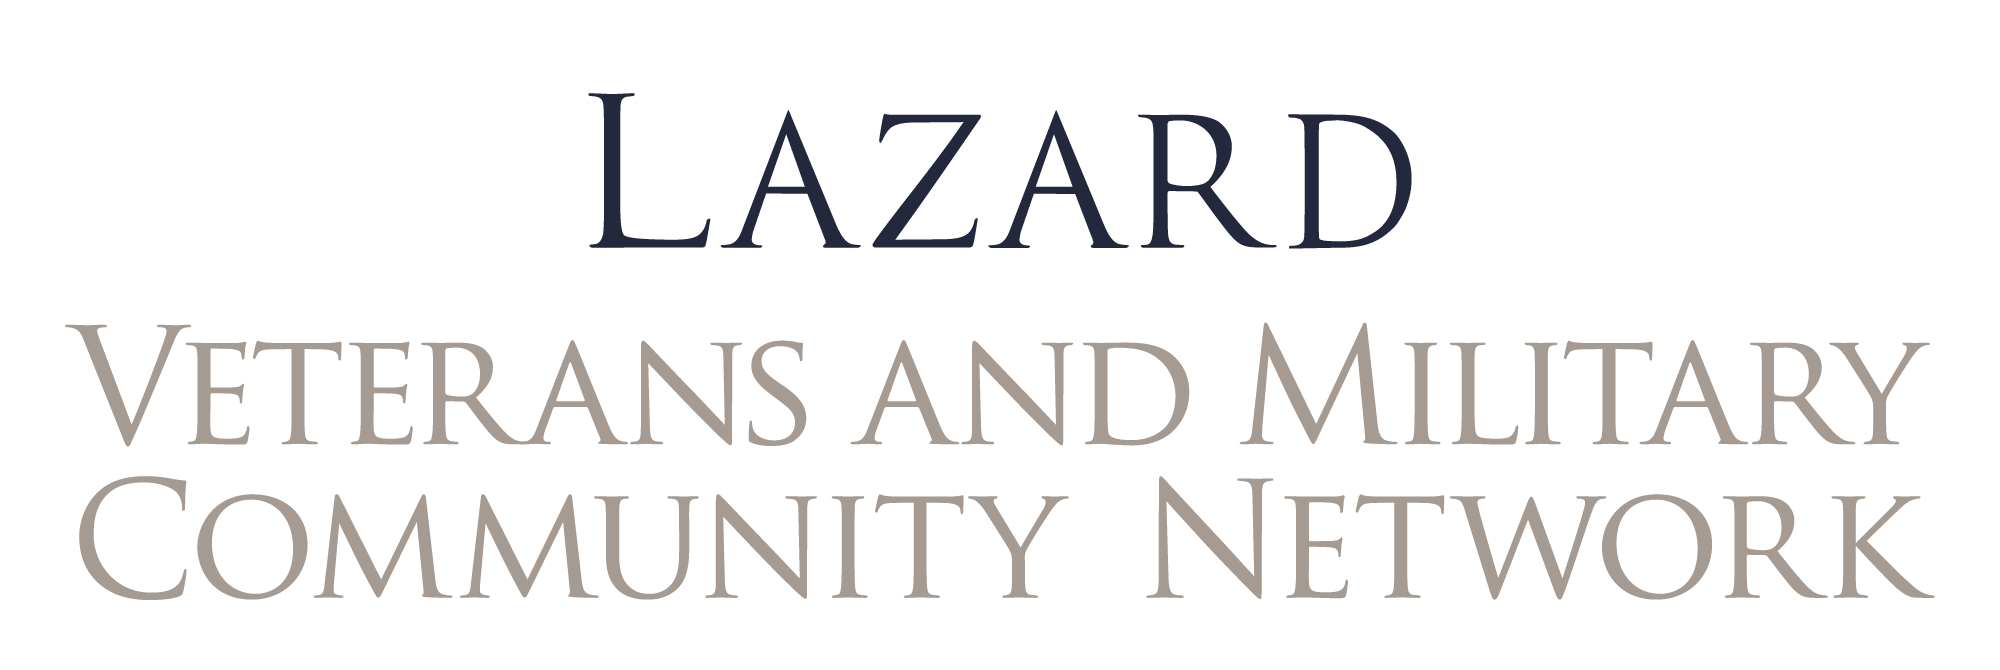 Lazard Veterans Network